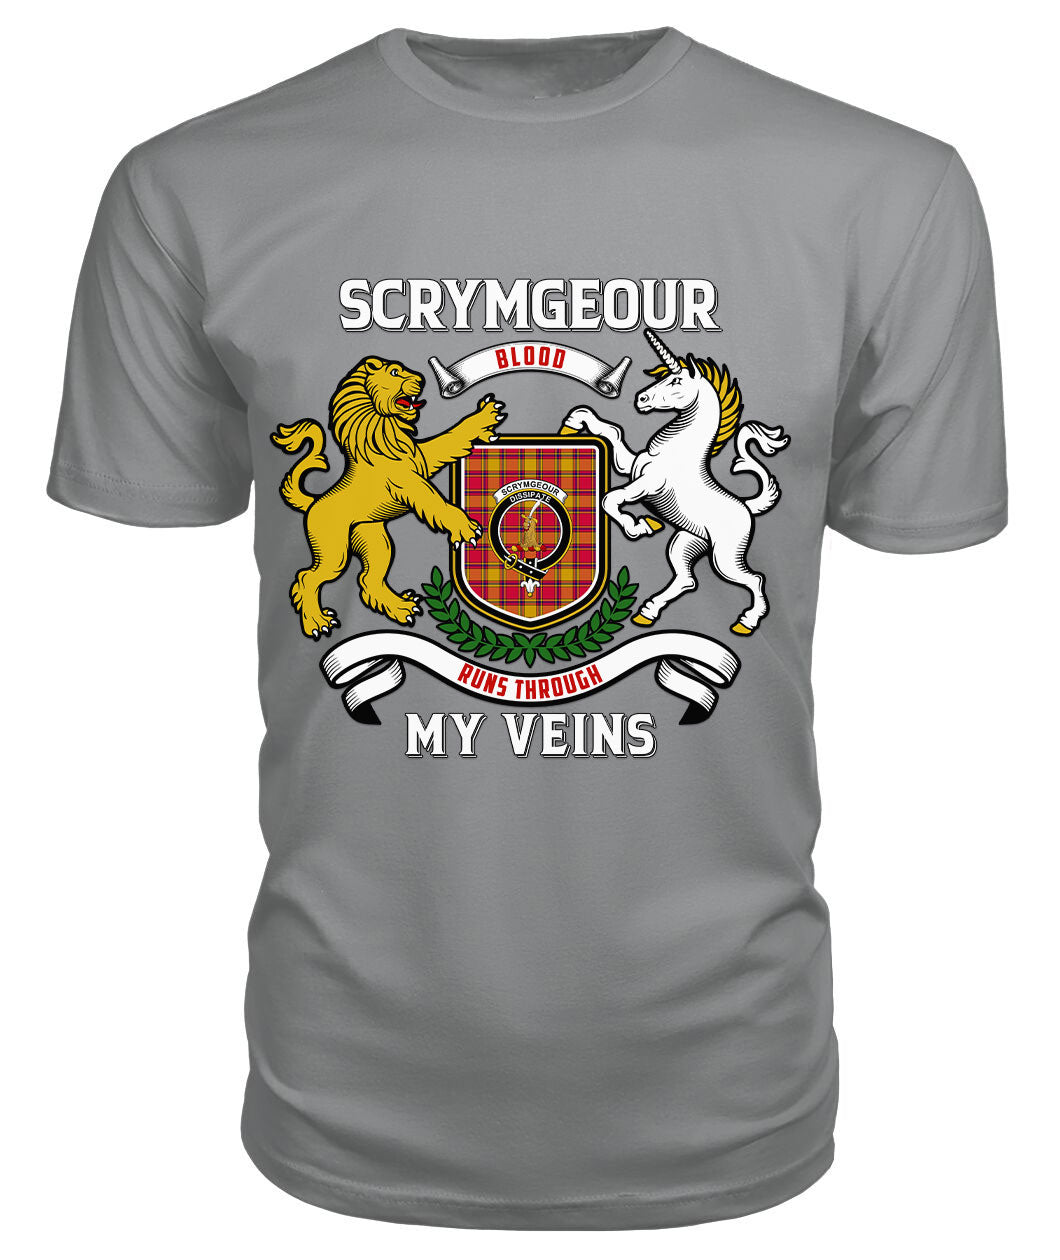 Scrymgeour Tartan Crest 2D T-shirt - Blood Runs Through My Veins Style